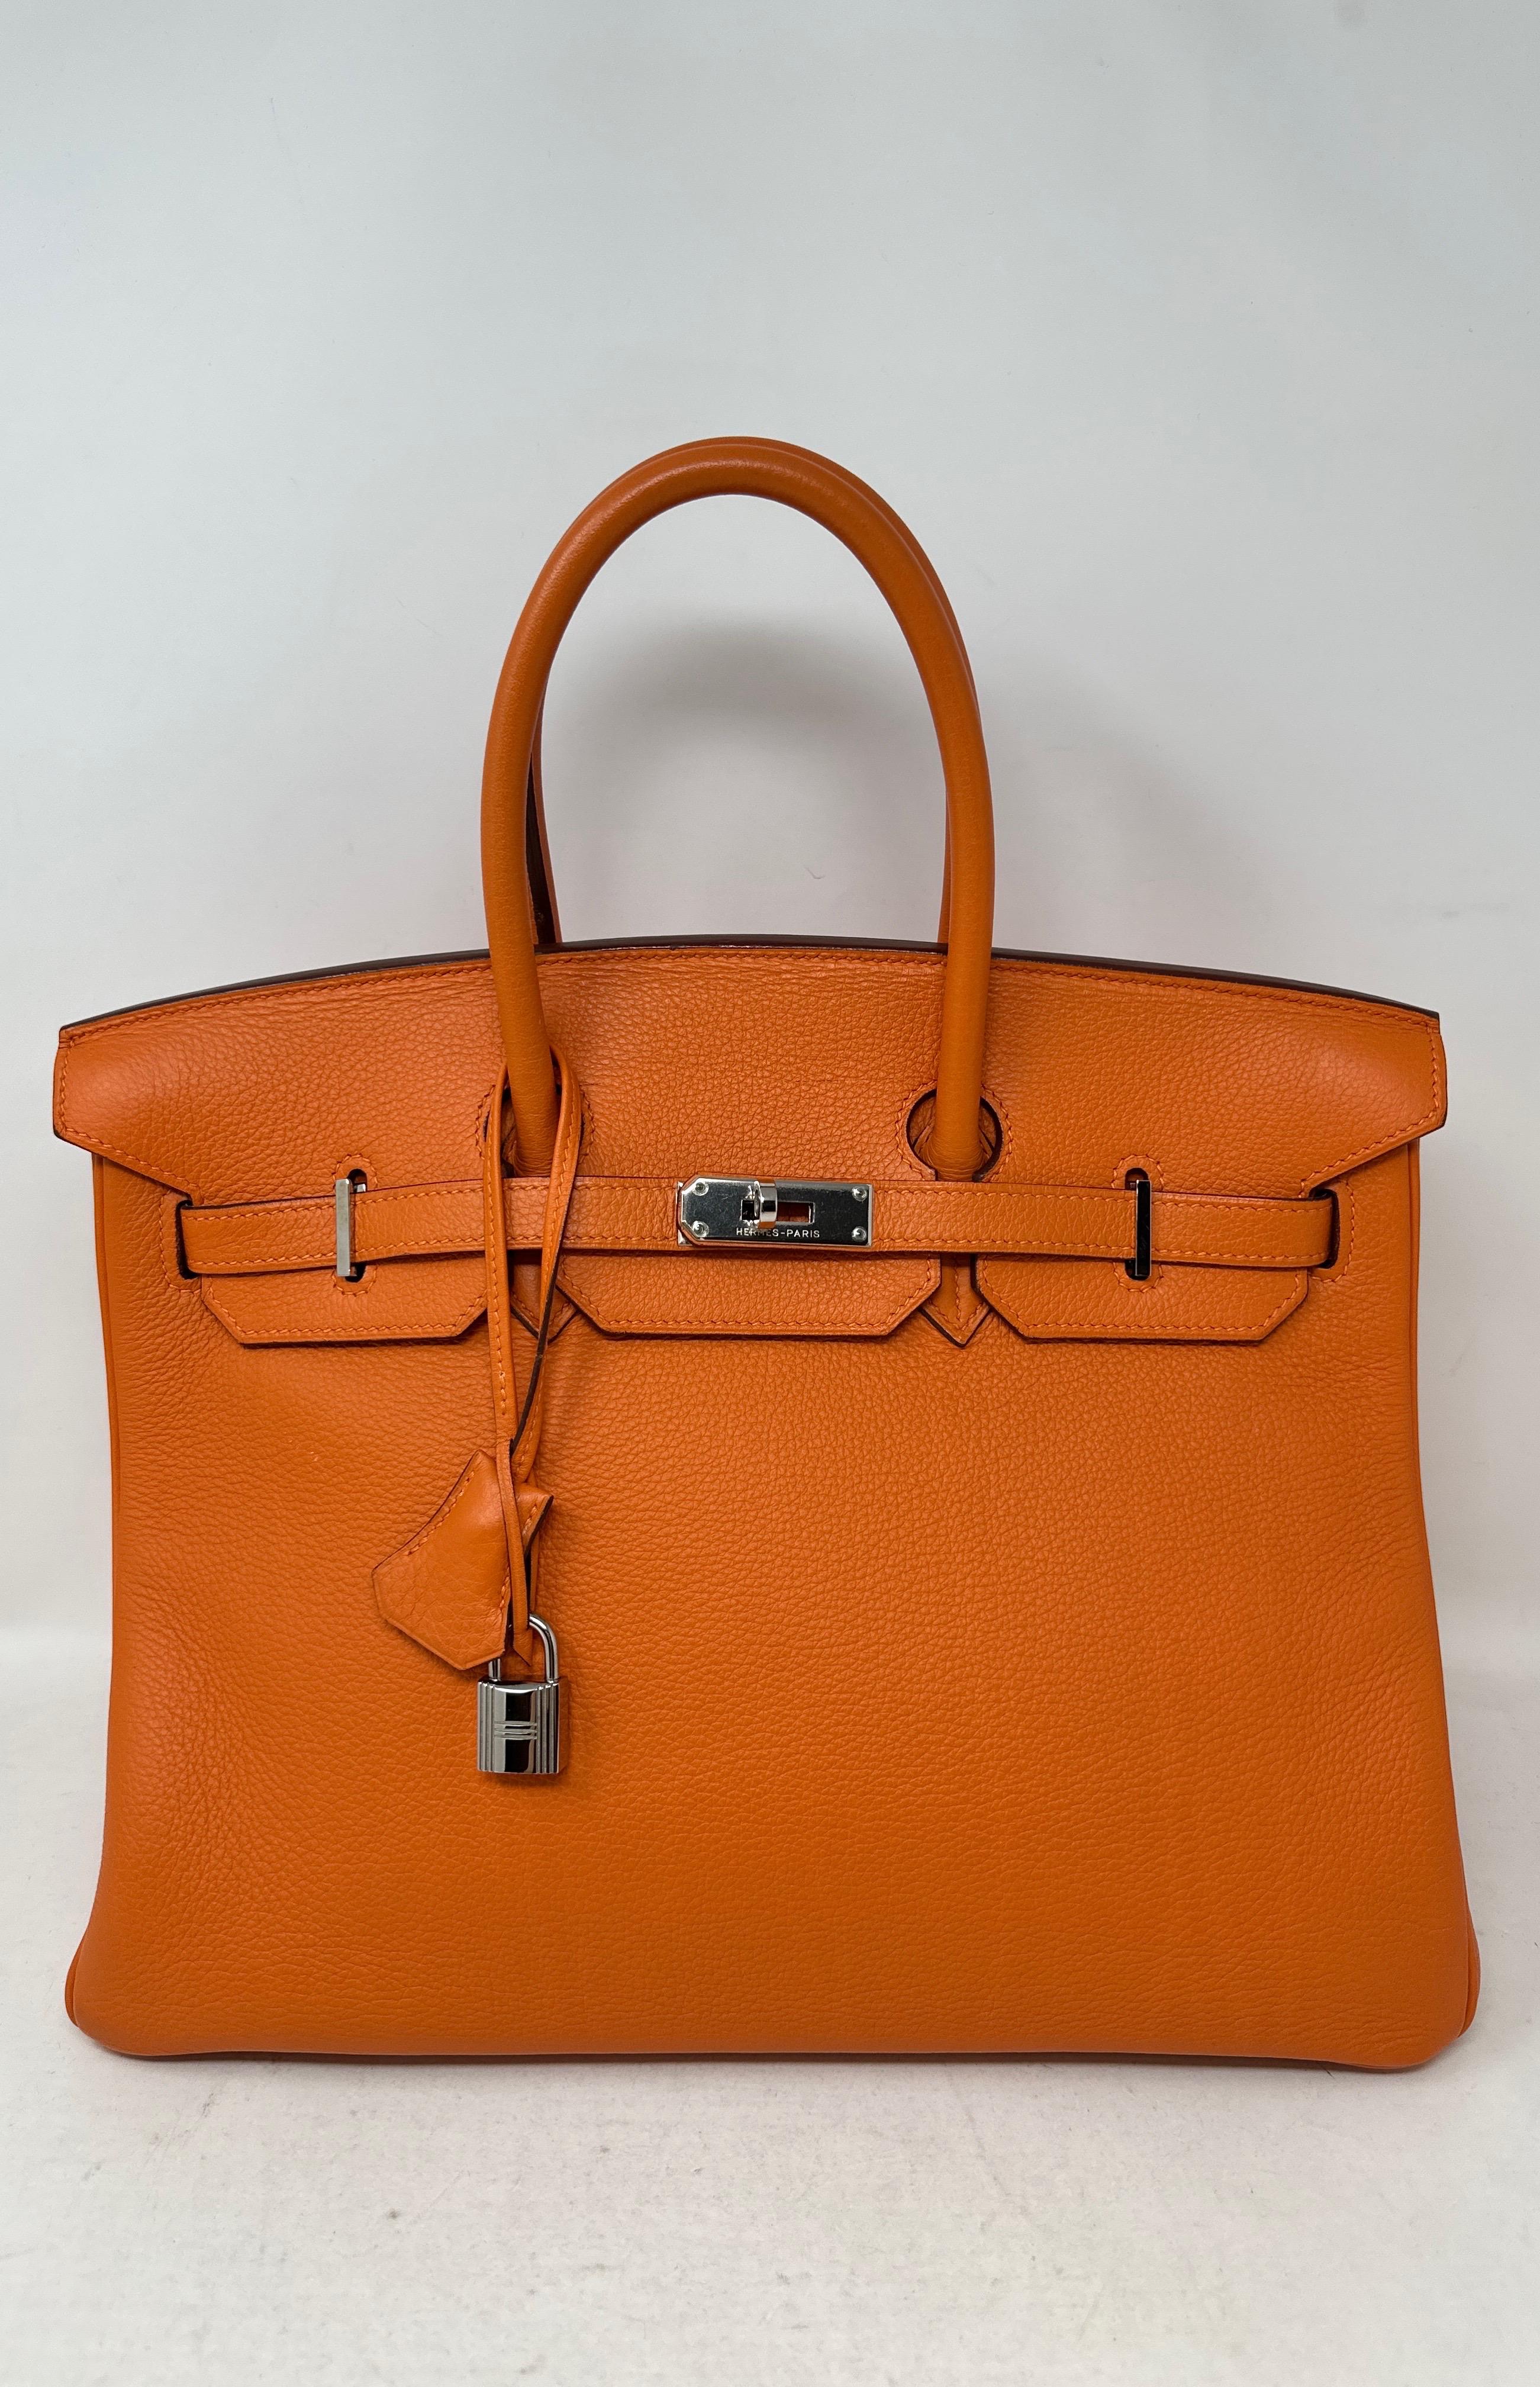 Hermès - Sac Birkin 35 orange  14